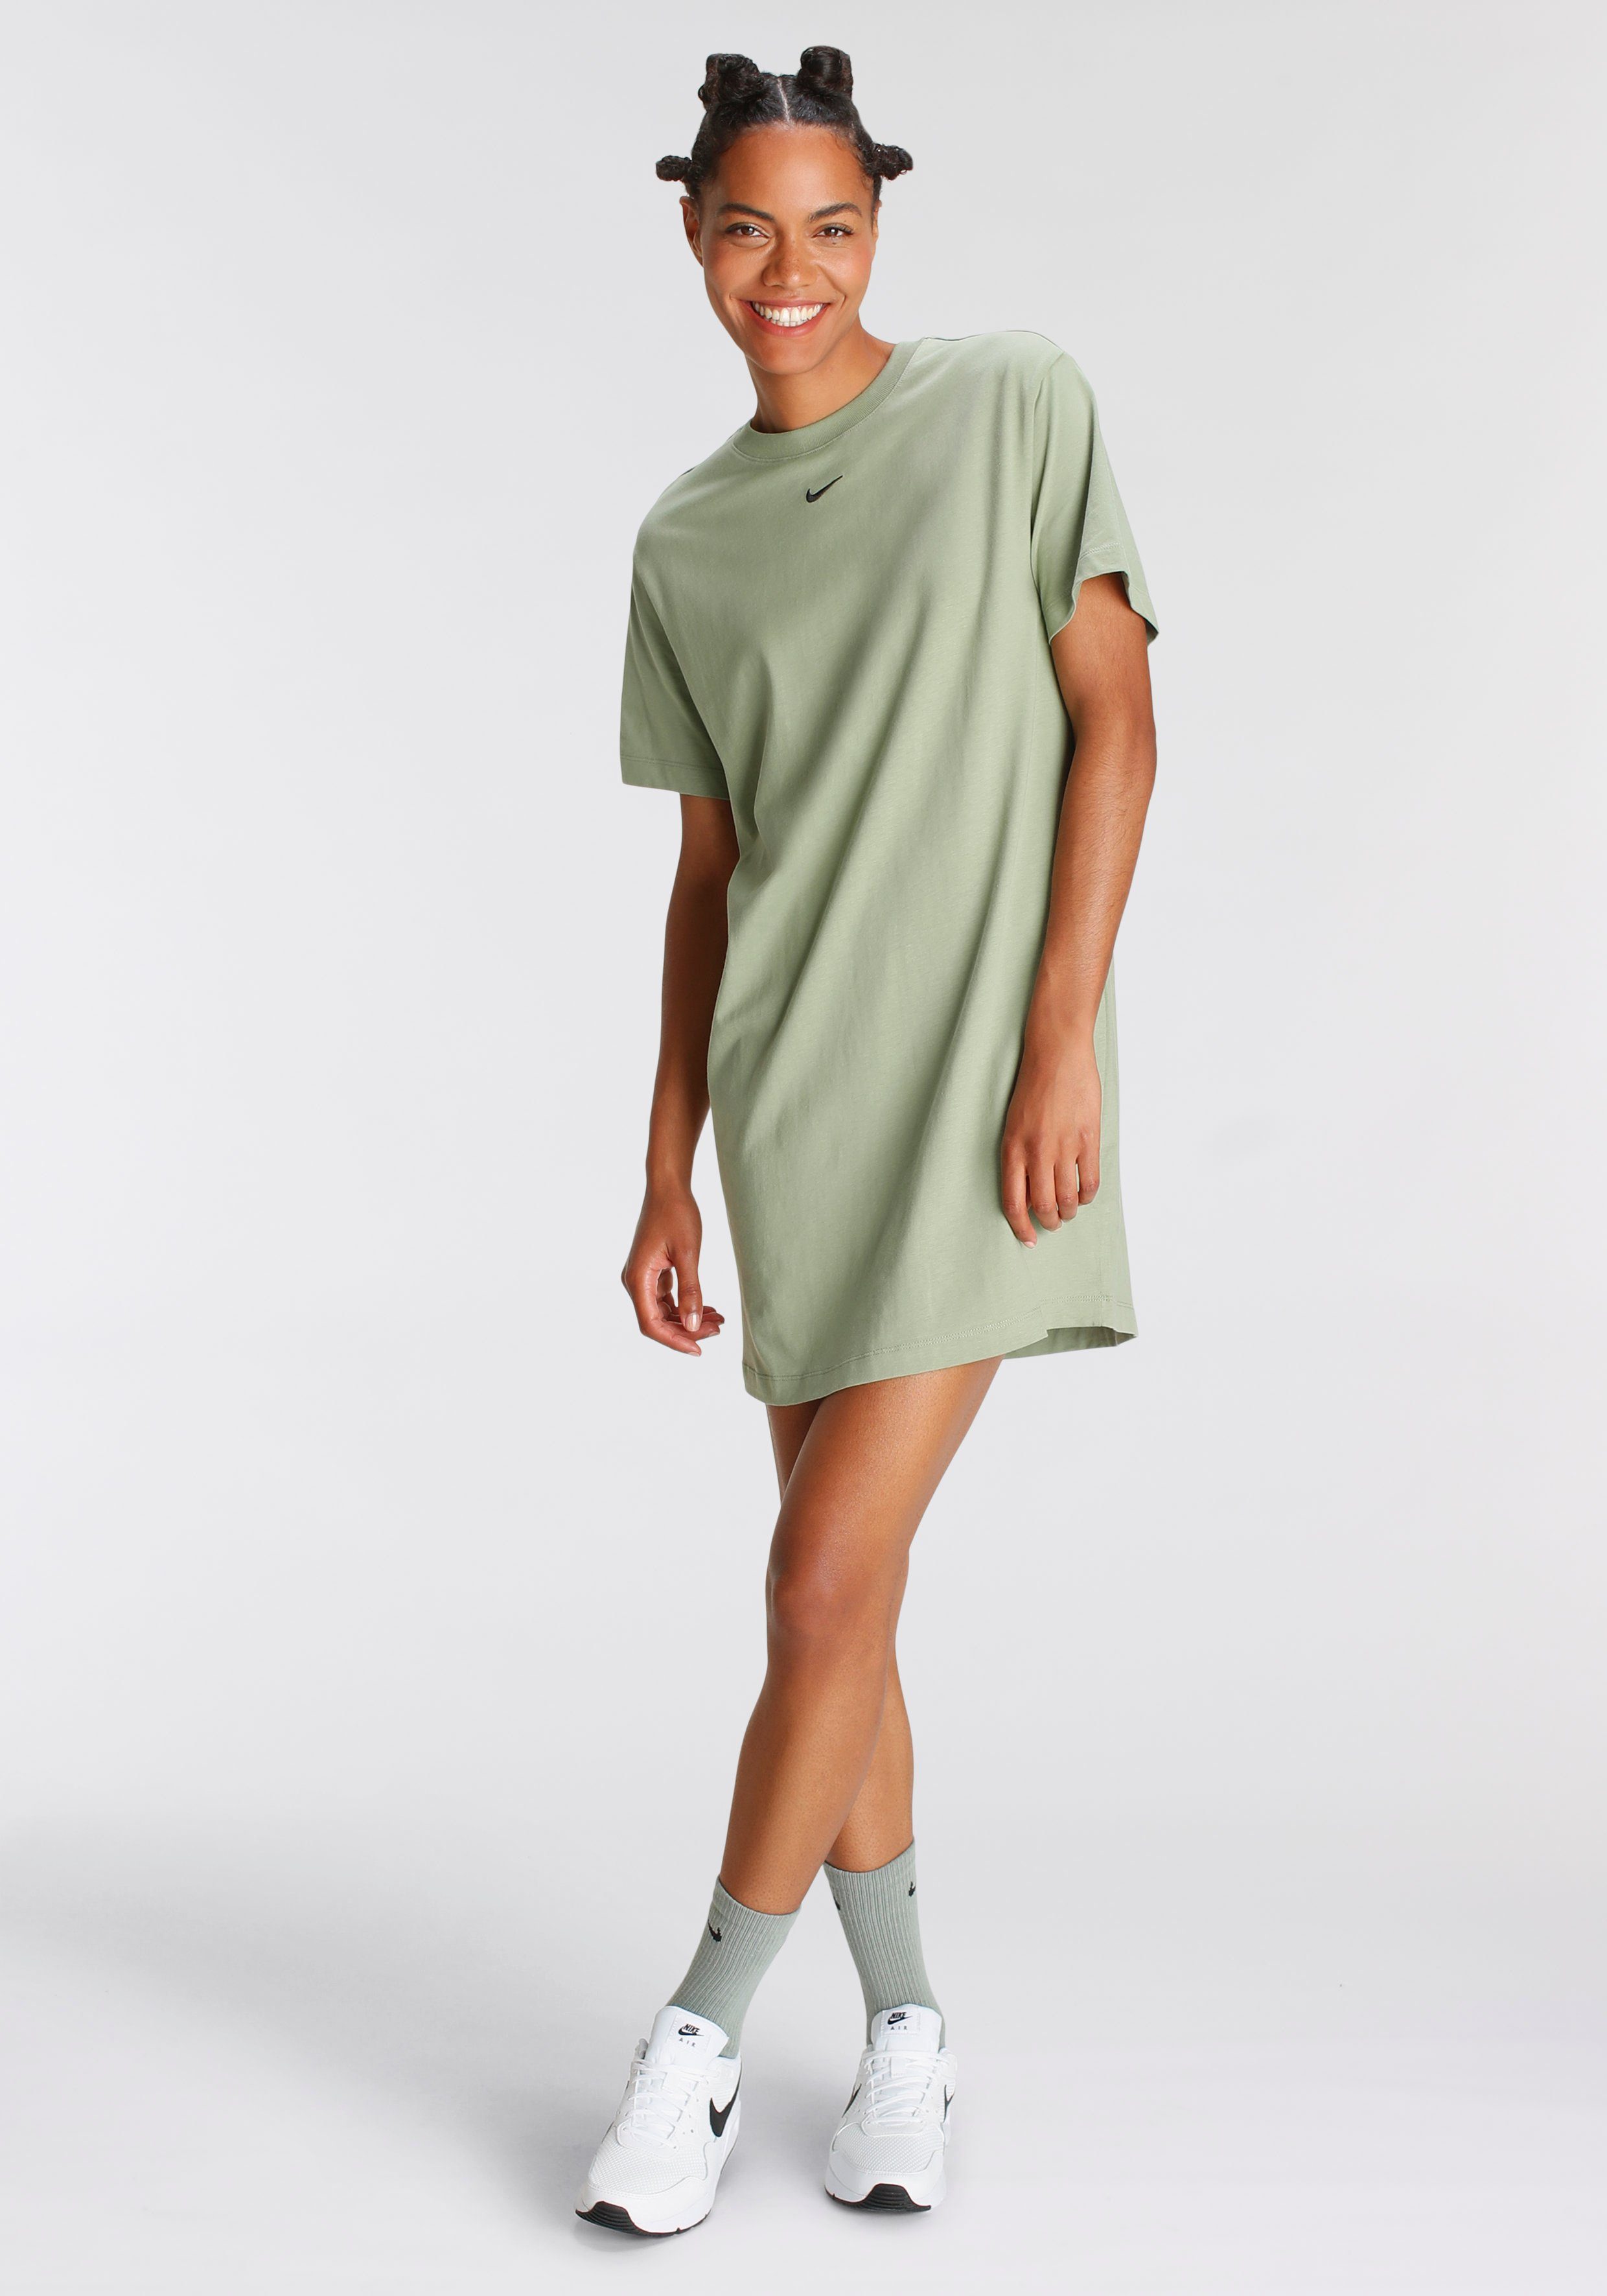 WOMEN'S DRESS OIL Nike ESSENTIAL GREEN/BLACK Sportswear Sommerkleid SHORT-SLEEVE